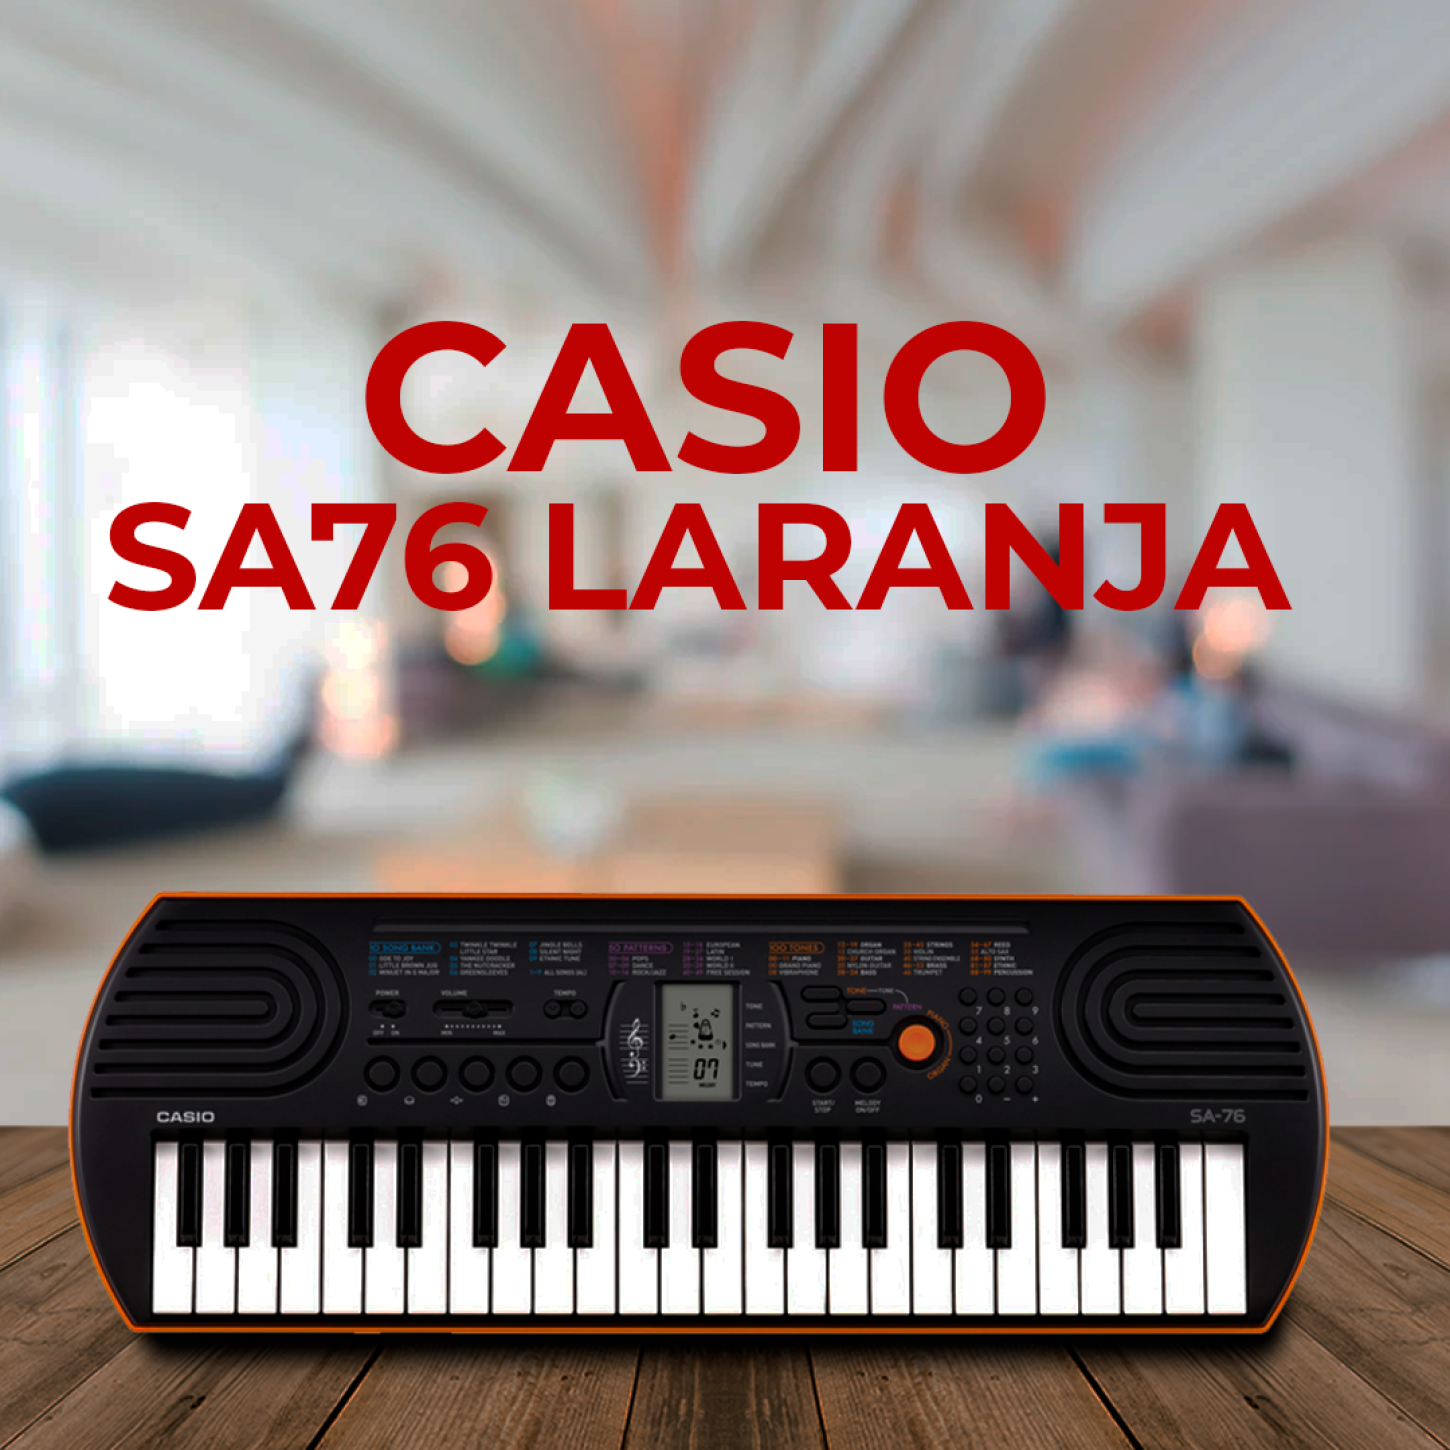 Teclado Casio Infantil Laranja Sa-76Ah2 - ELETRÔNICA PROGRESSO -  INSTRUMENTOS MUSICAIS & ÁUDIO PROFISSIONAL